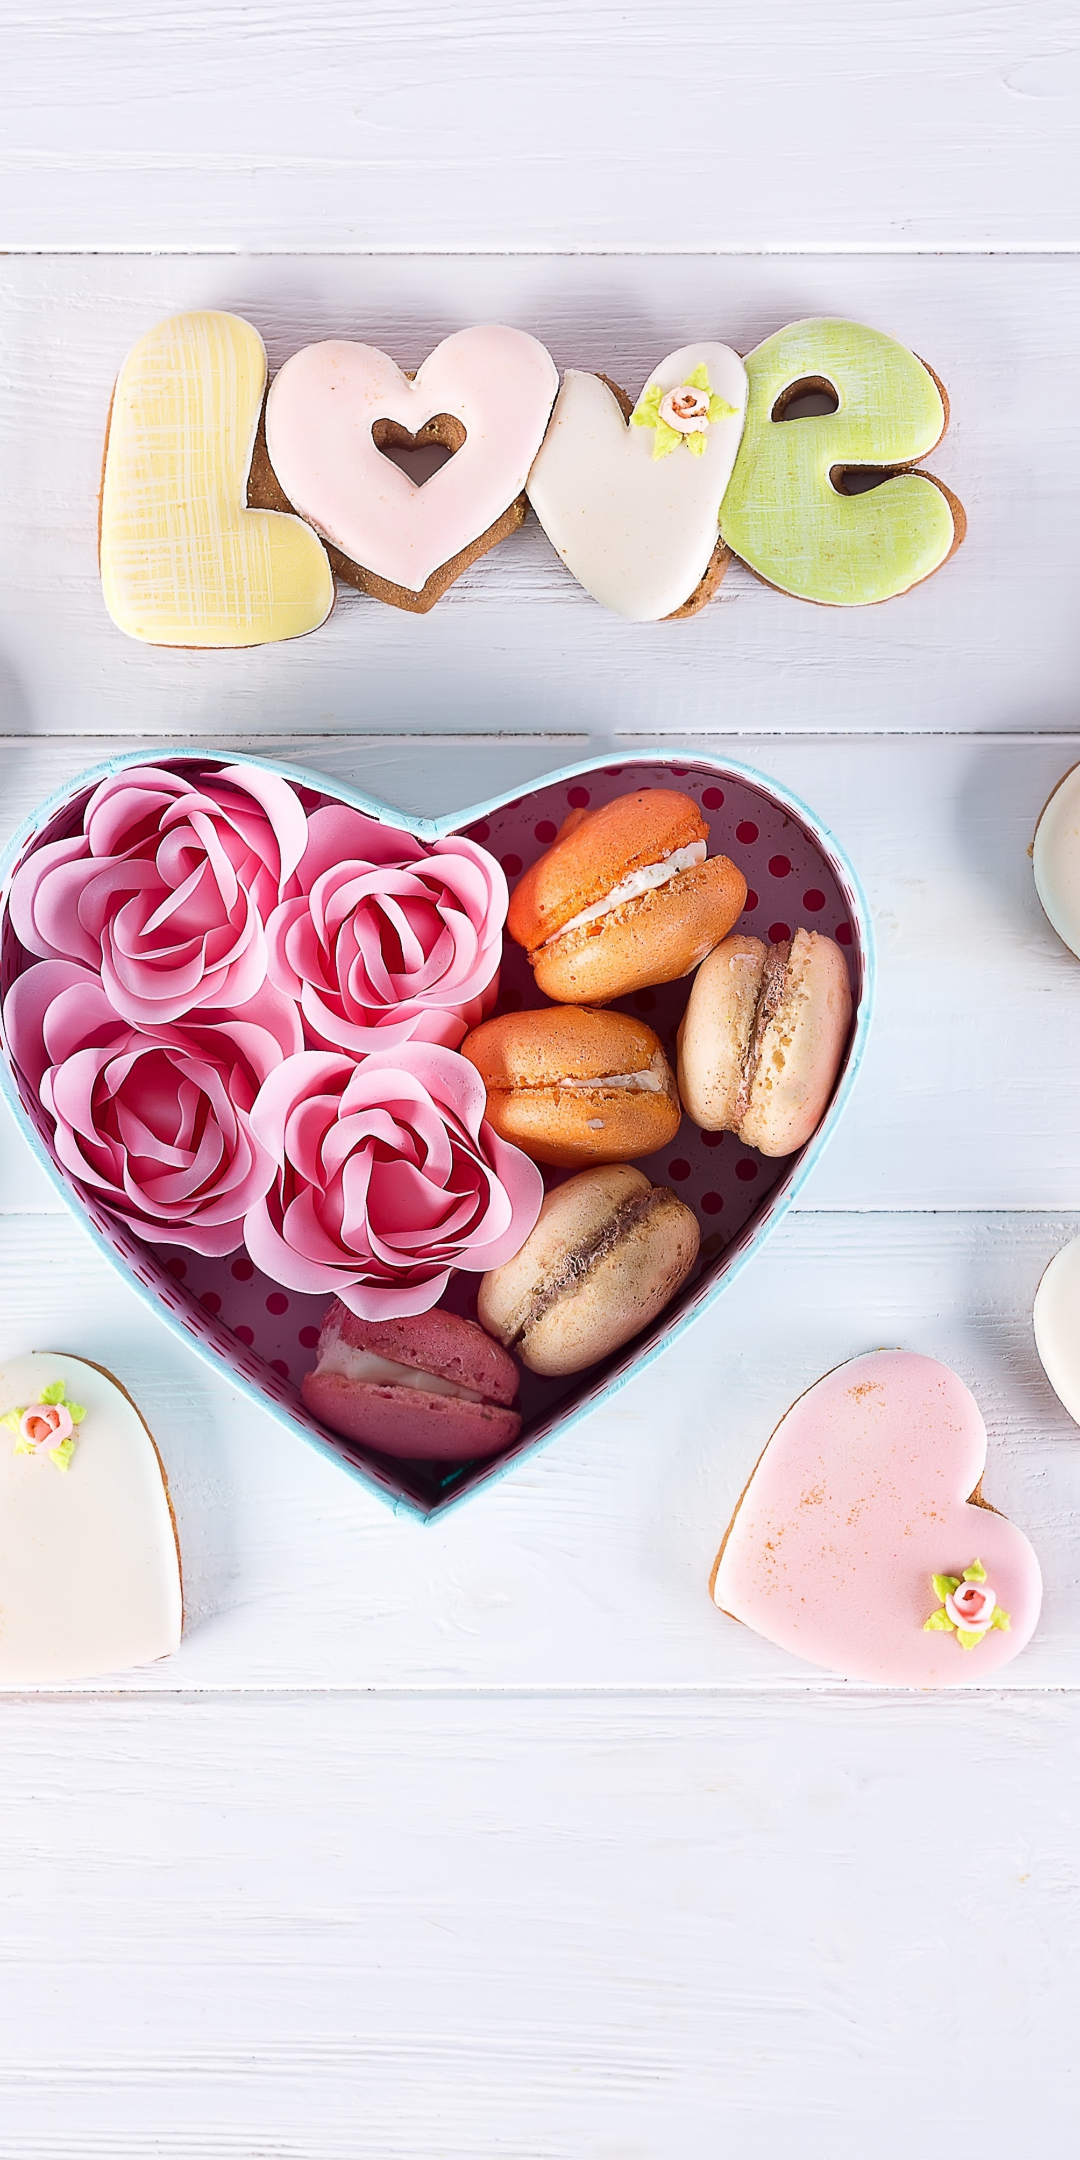 Rose, heart shape, cookies, macaron, 1080x2160 wallpaper